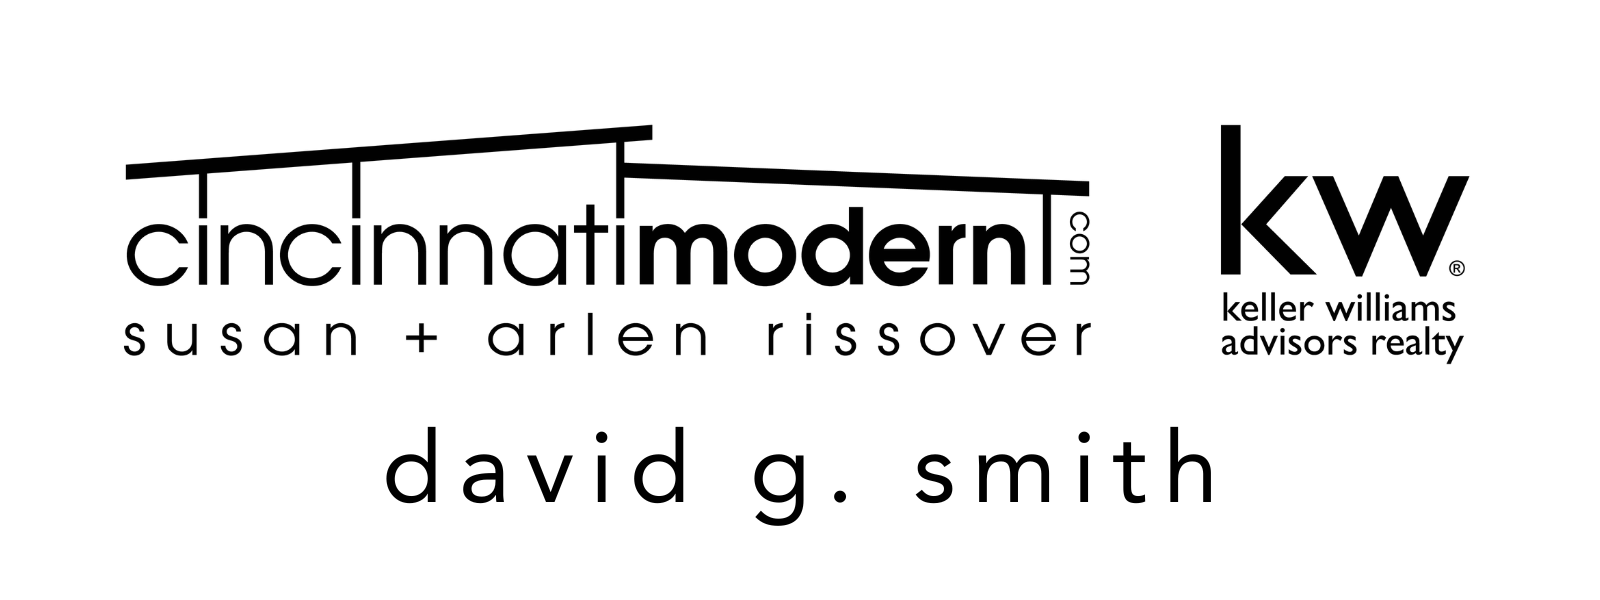 Cincinnati Modern Kw David Smith Logo 1600x600 